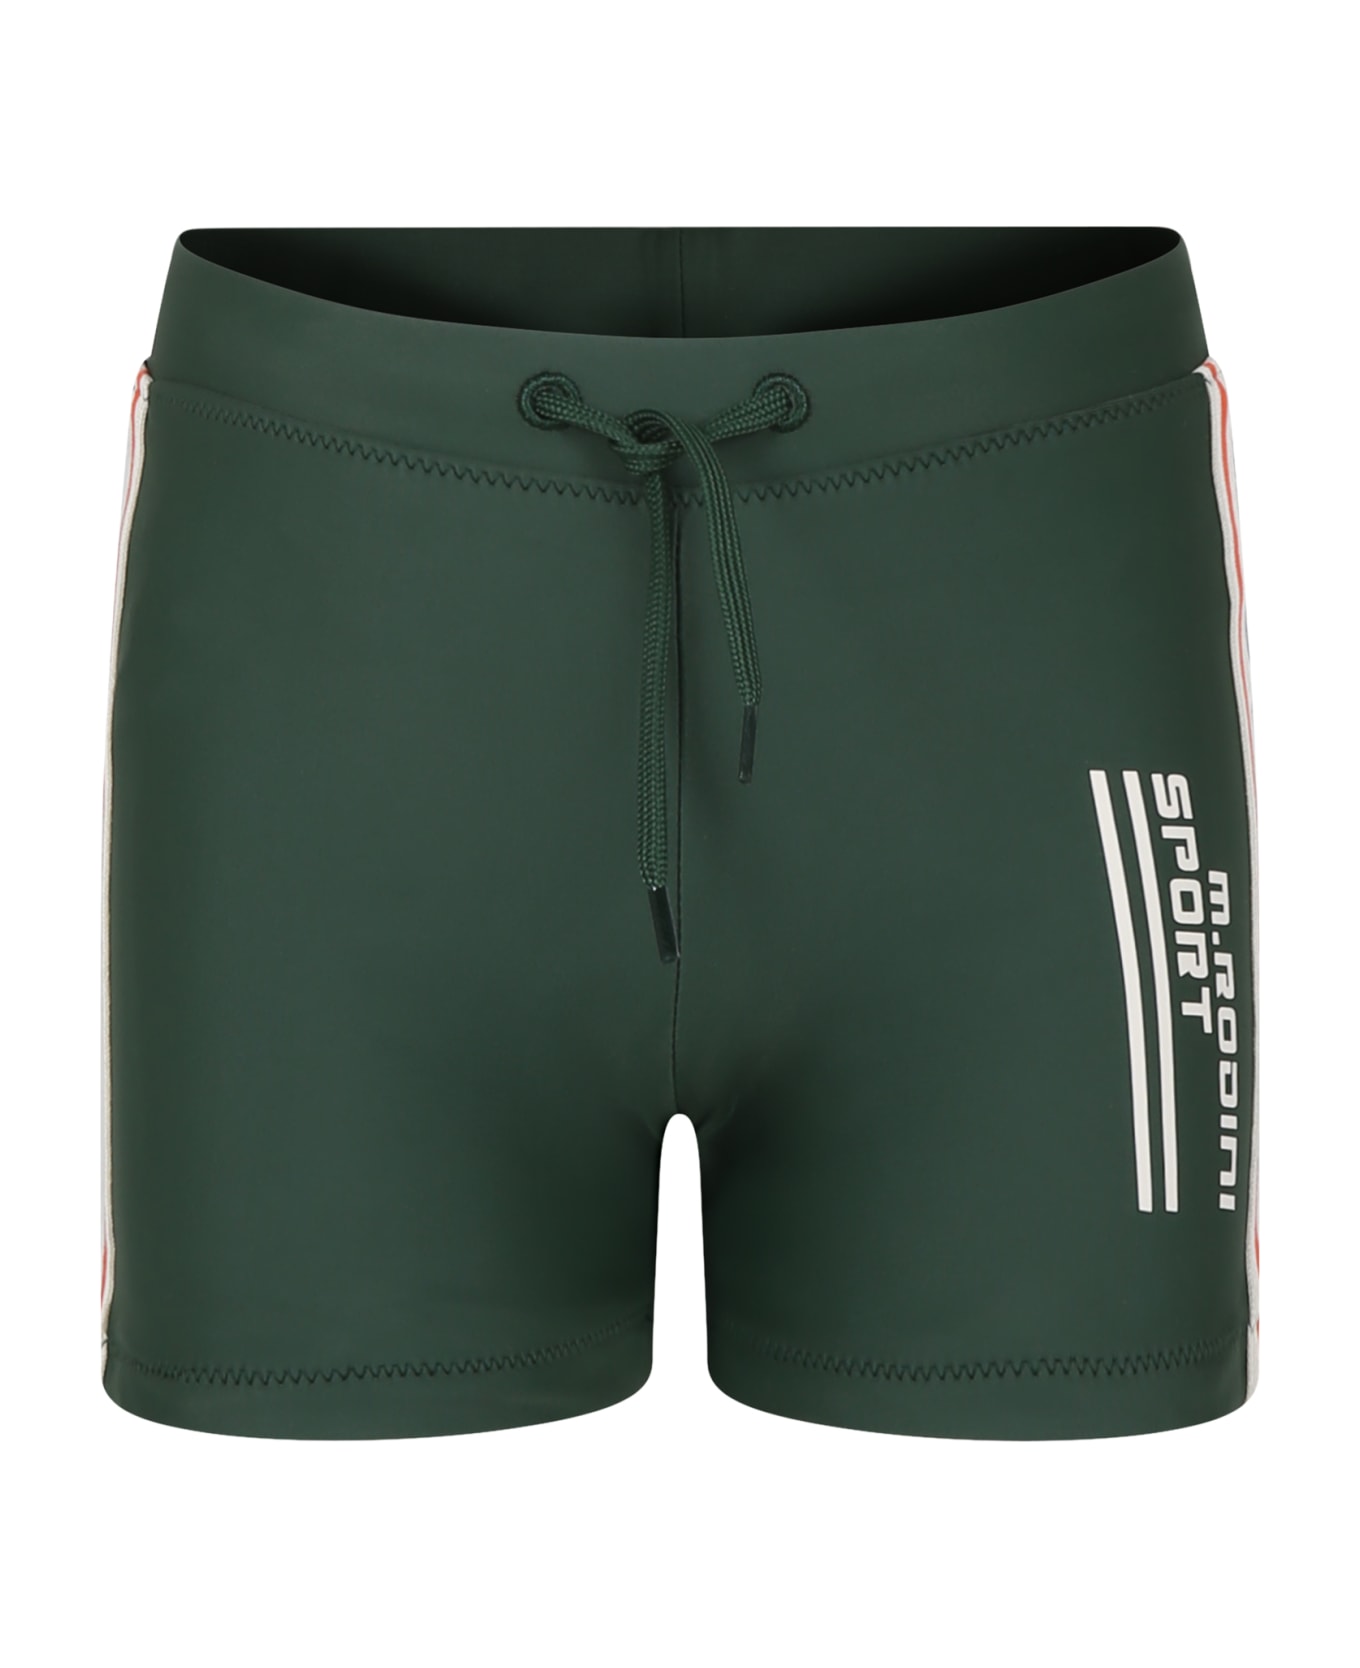 Mini Rodini Green Swim Shorts For Boy With Logo - Green